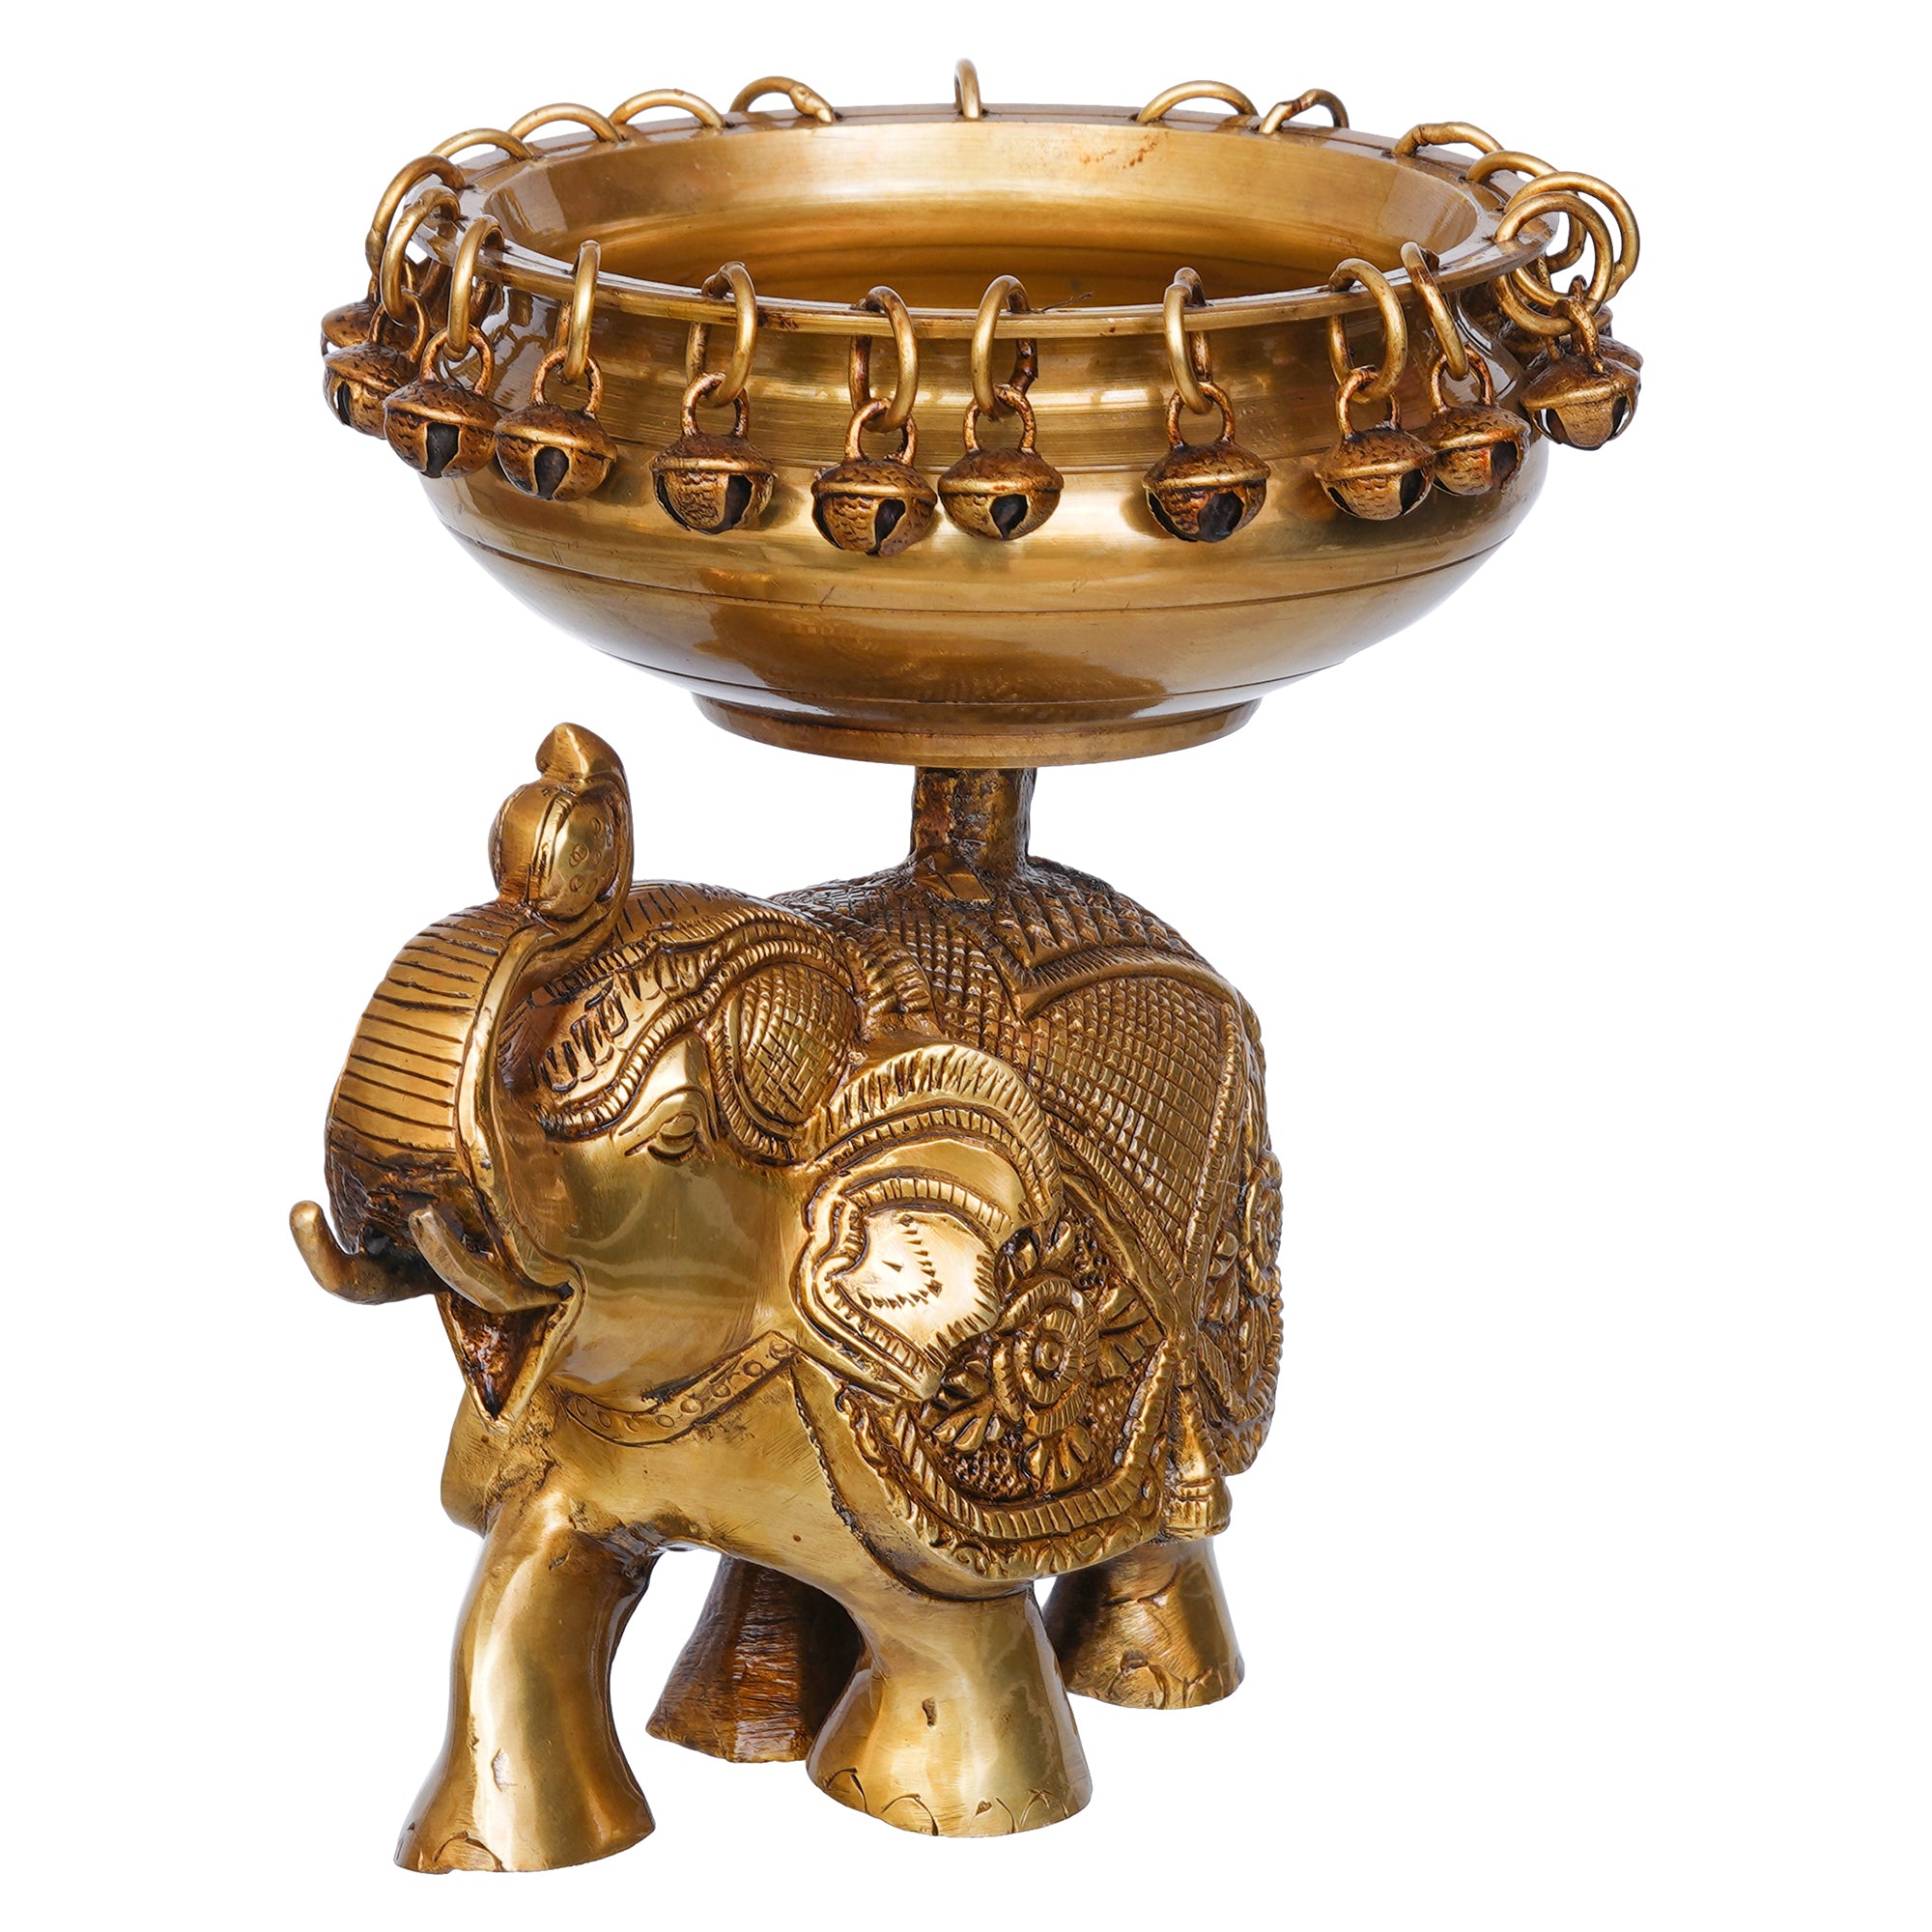 Golden Brass Urli on Elephant Statue with Bells for Floating Flowers - Ethnic Design Decorative Showpiece for Home & Office Decor, Diwali Decoration - Gift for Housewarming, Navratri Festival 6